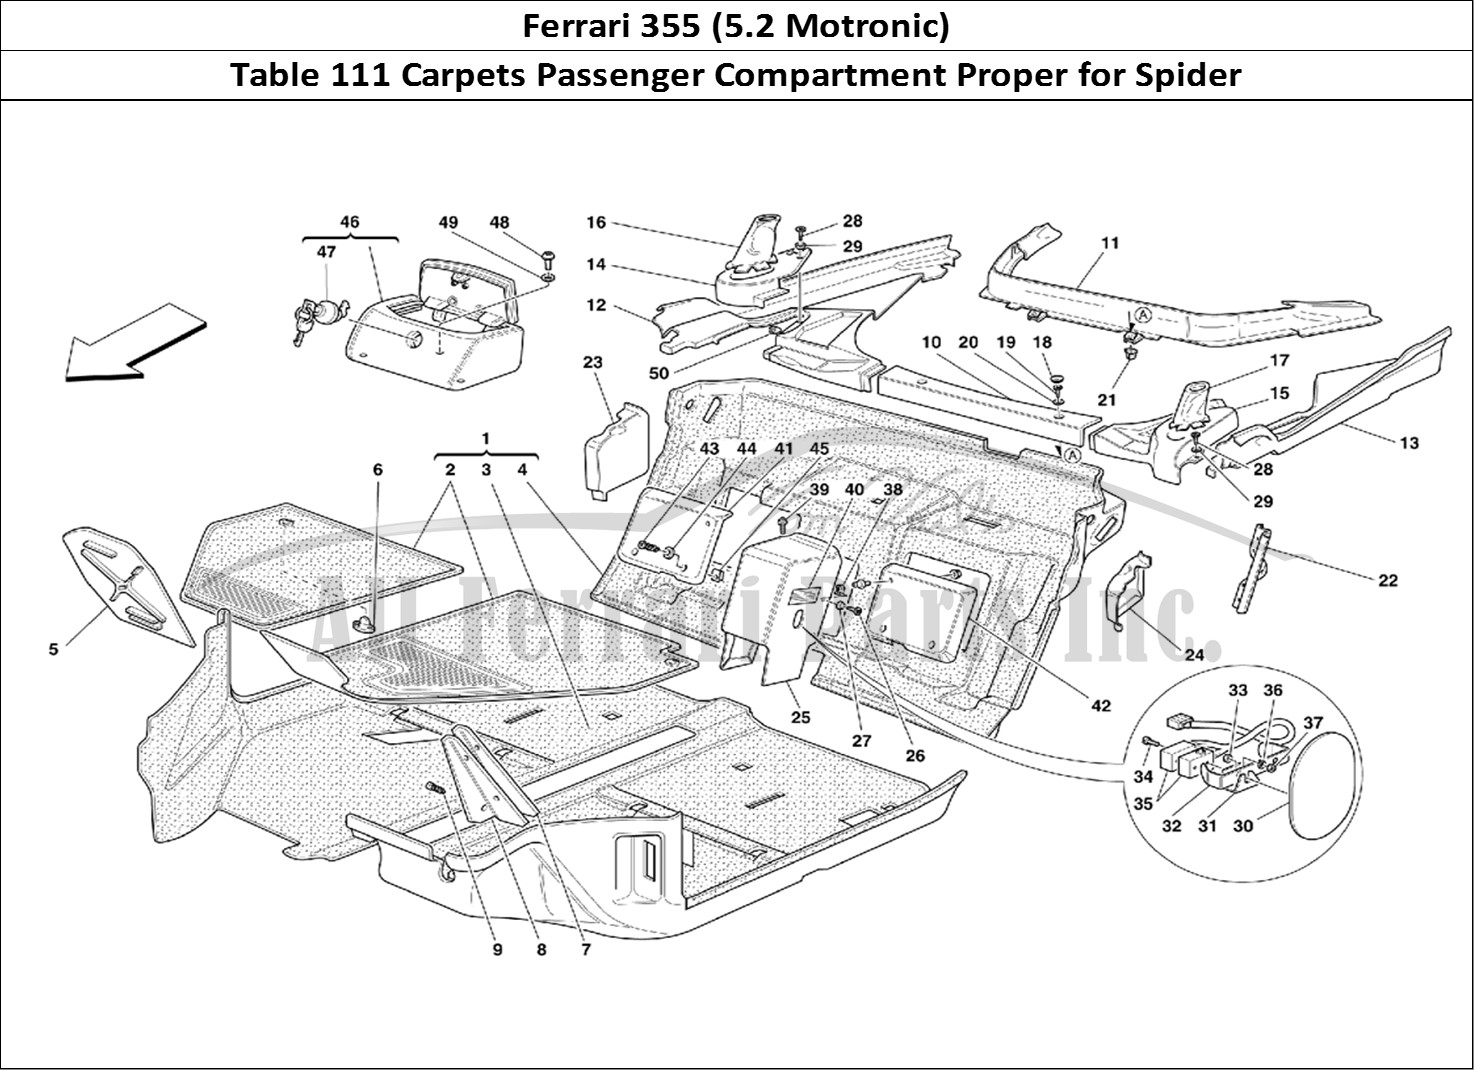 Ferrari Parts Ferrari 355 (5.2 Motronic) Page 111 Passengers Compartment Ca